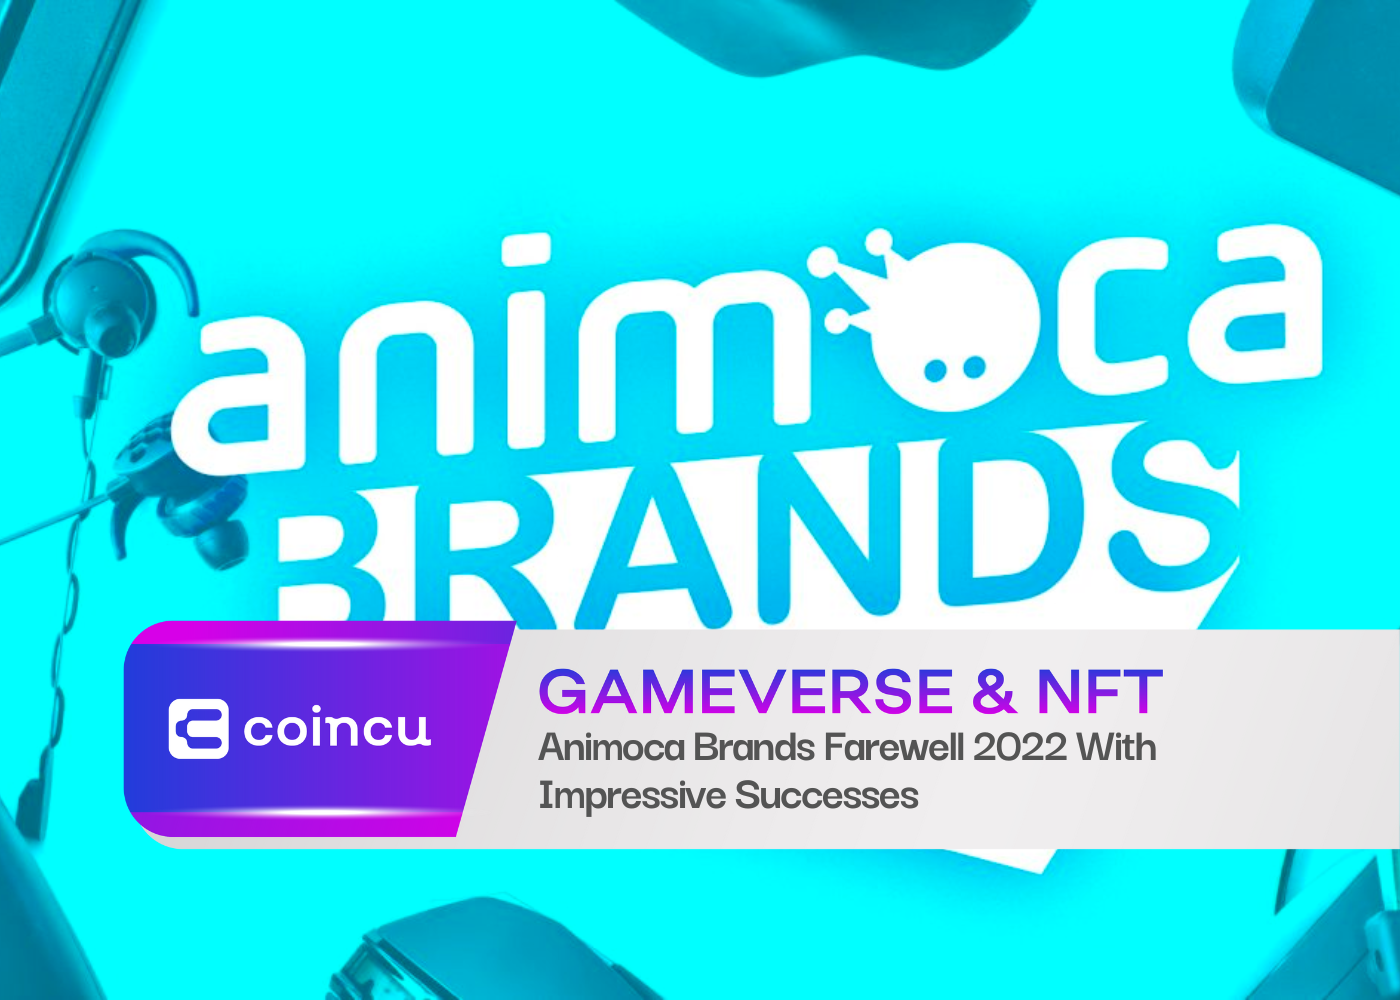 Animoca Brands despide 2022 con impresionantes éxitos